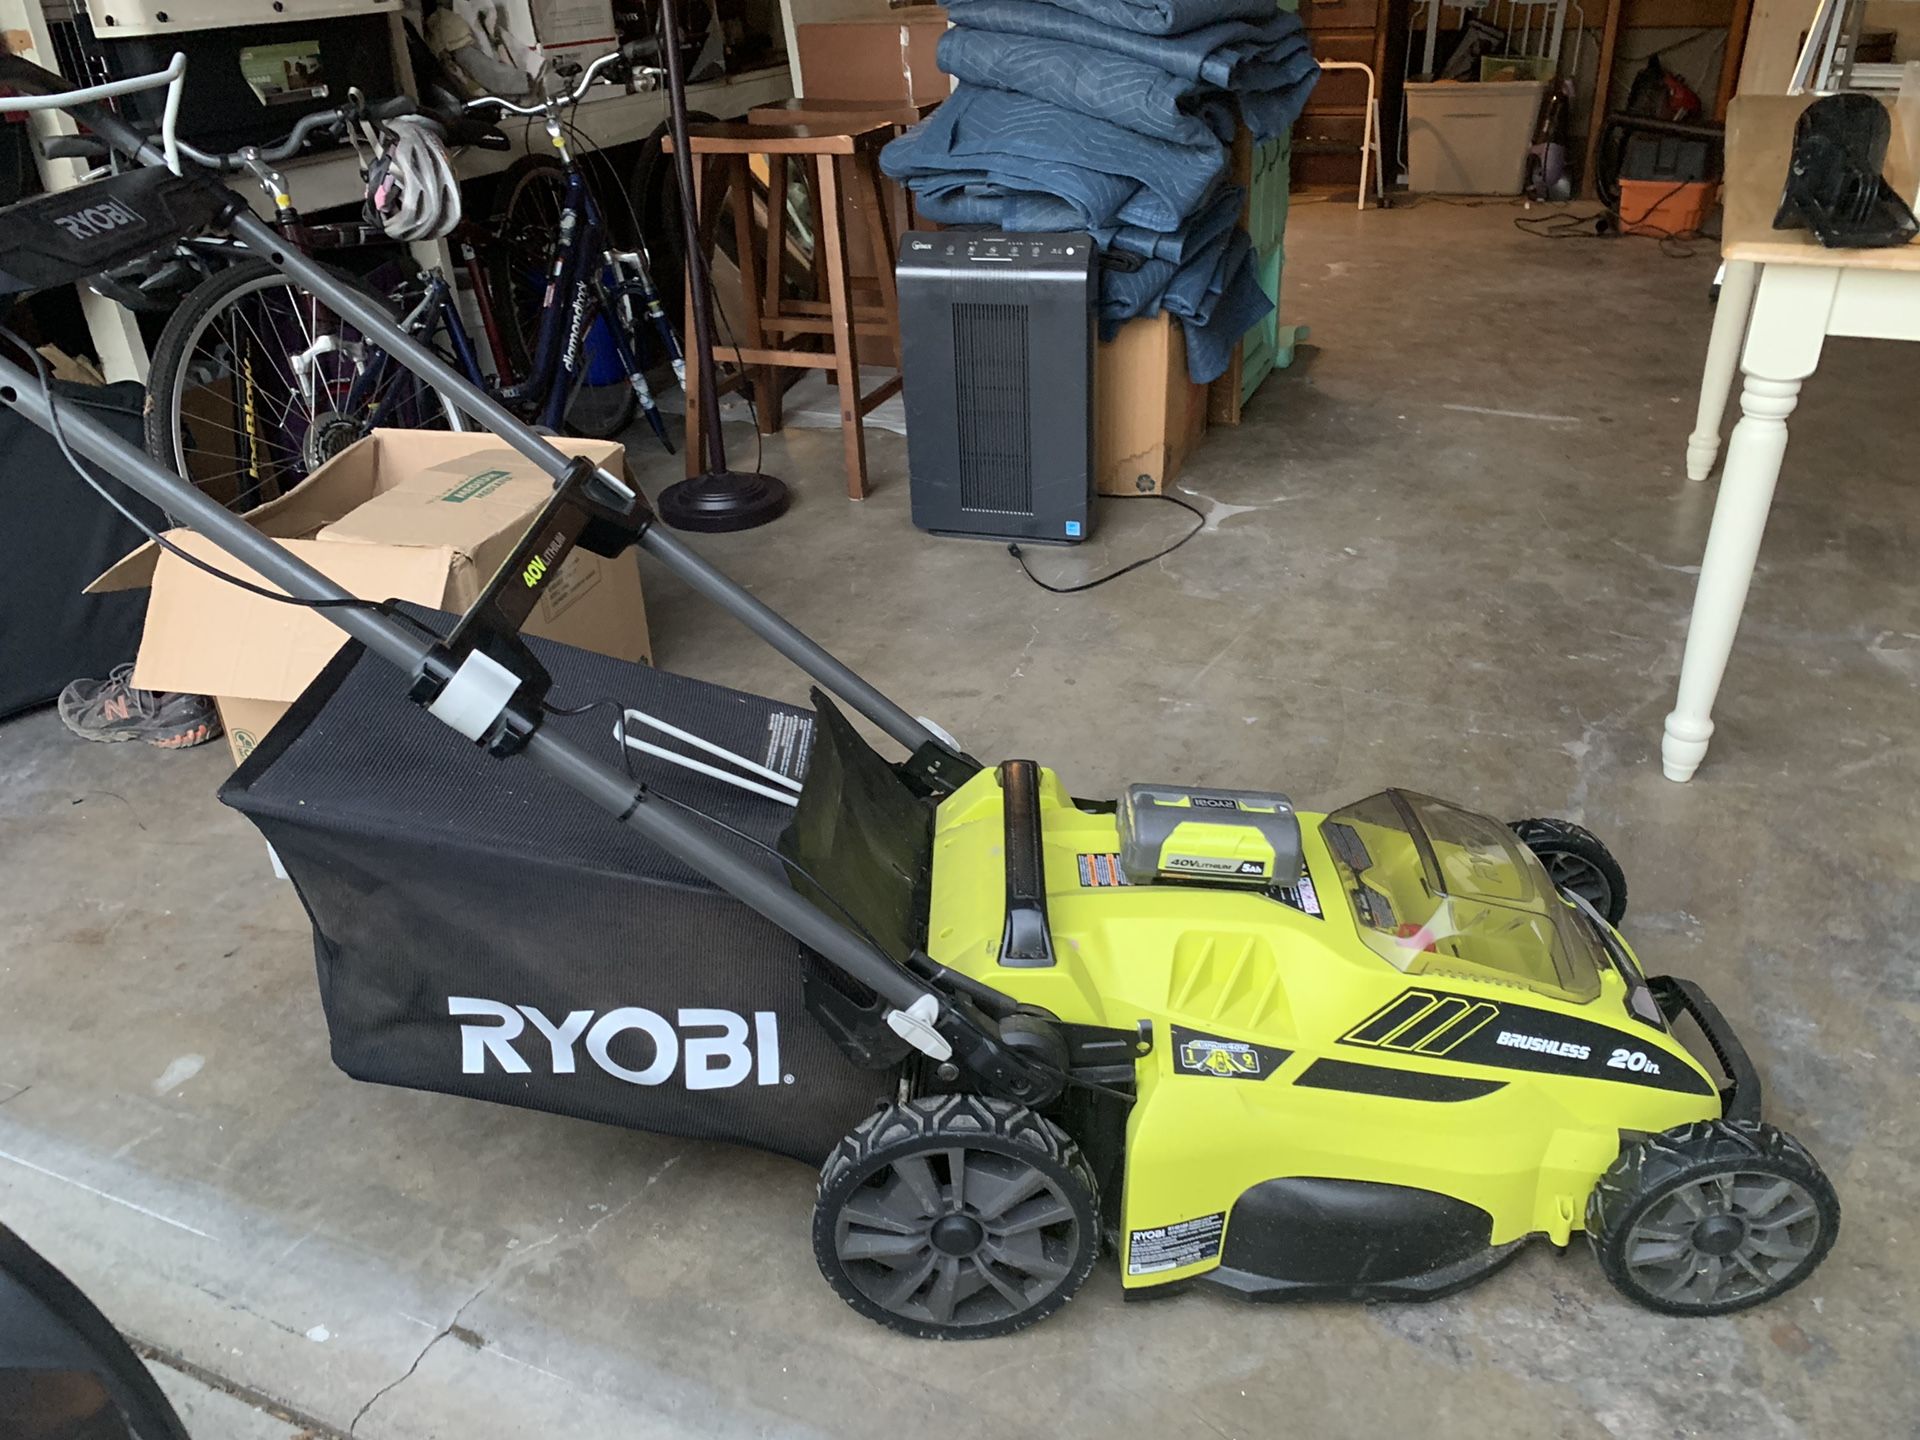 Ryobi electric lawn mower